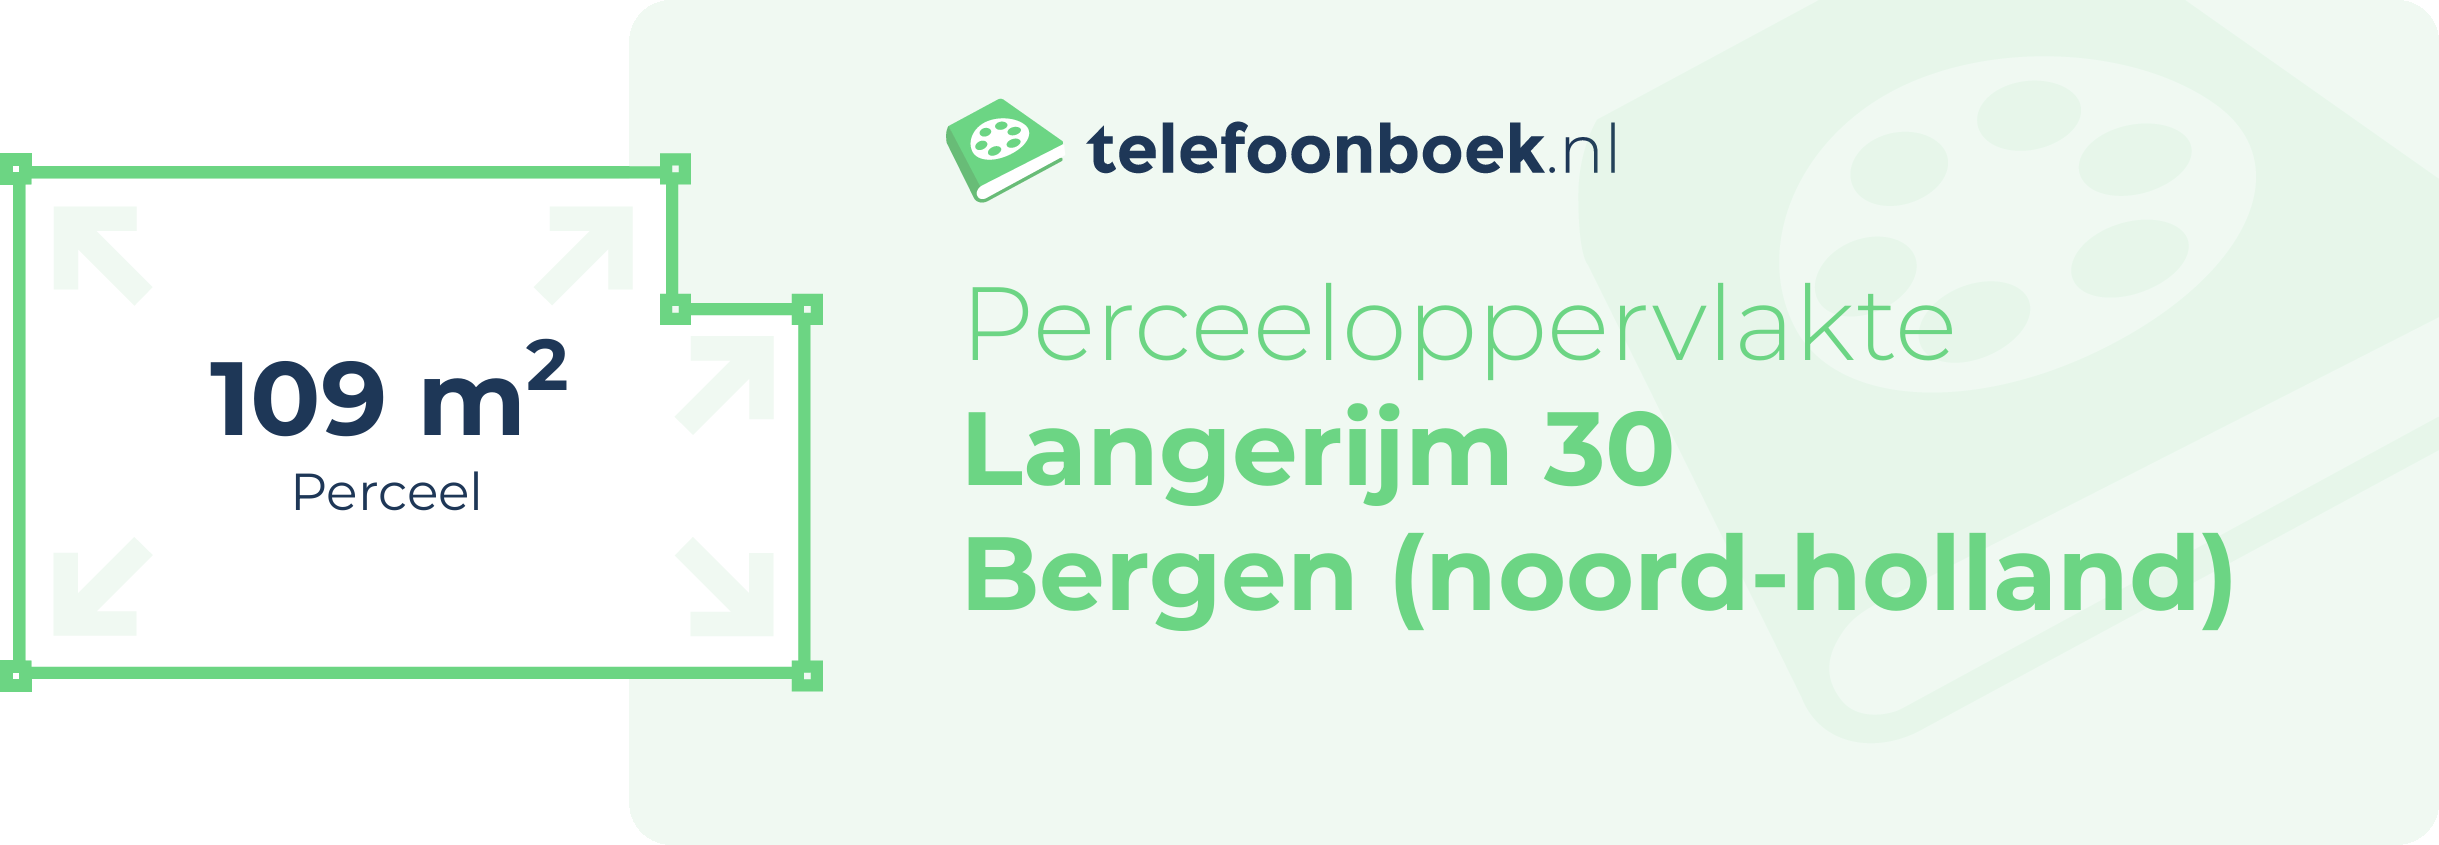 Perceeloppervlakte Langerijm 30 Bergen (Noord-Holland)